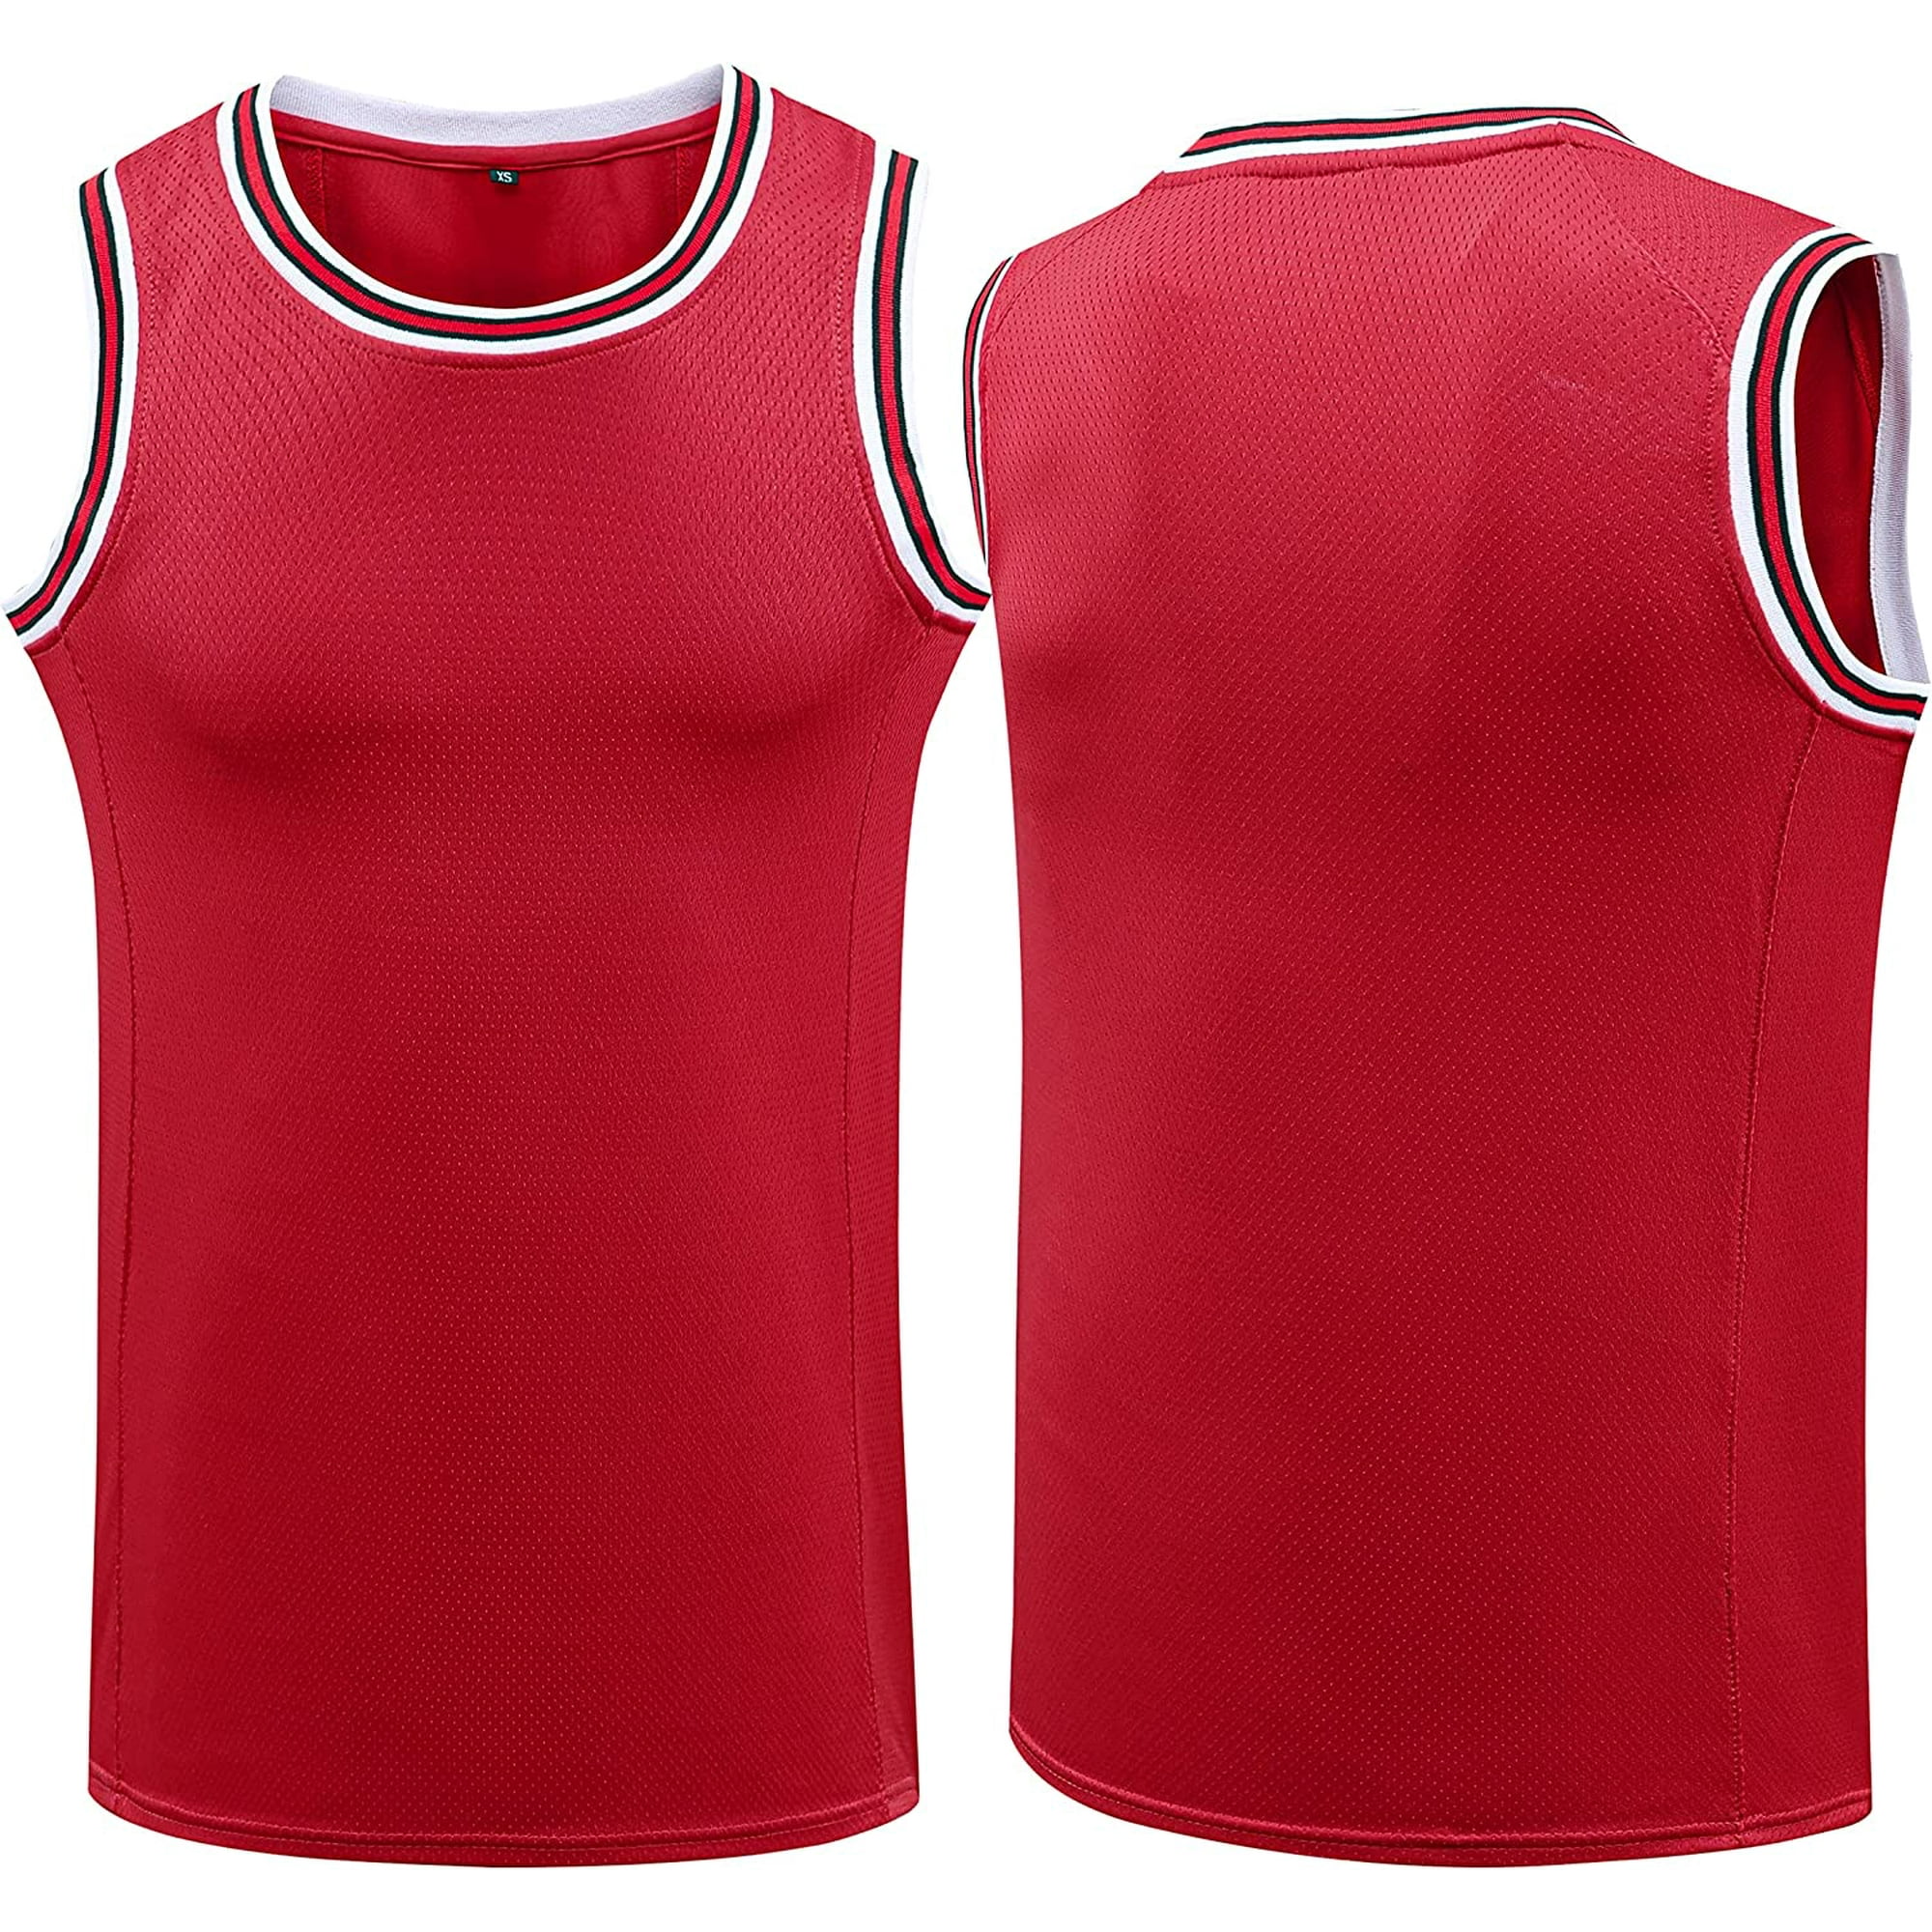 SHAJUNQI Basketball Jersey Men's Mesh Athletic Sports Shirts